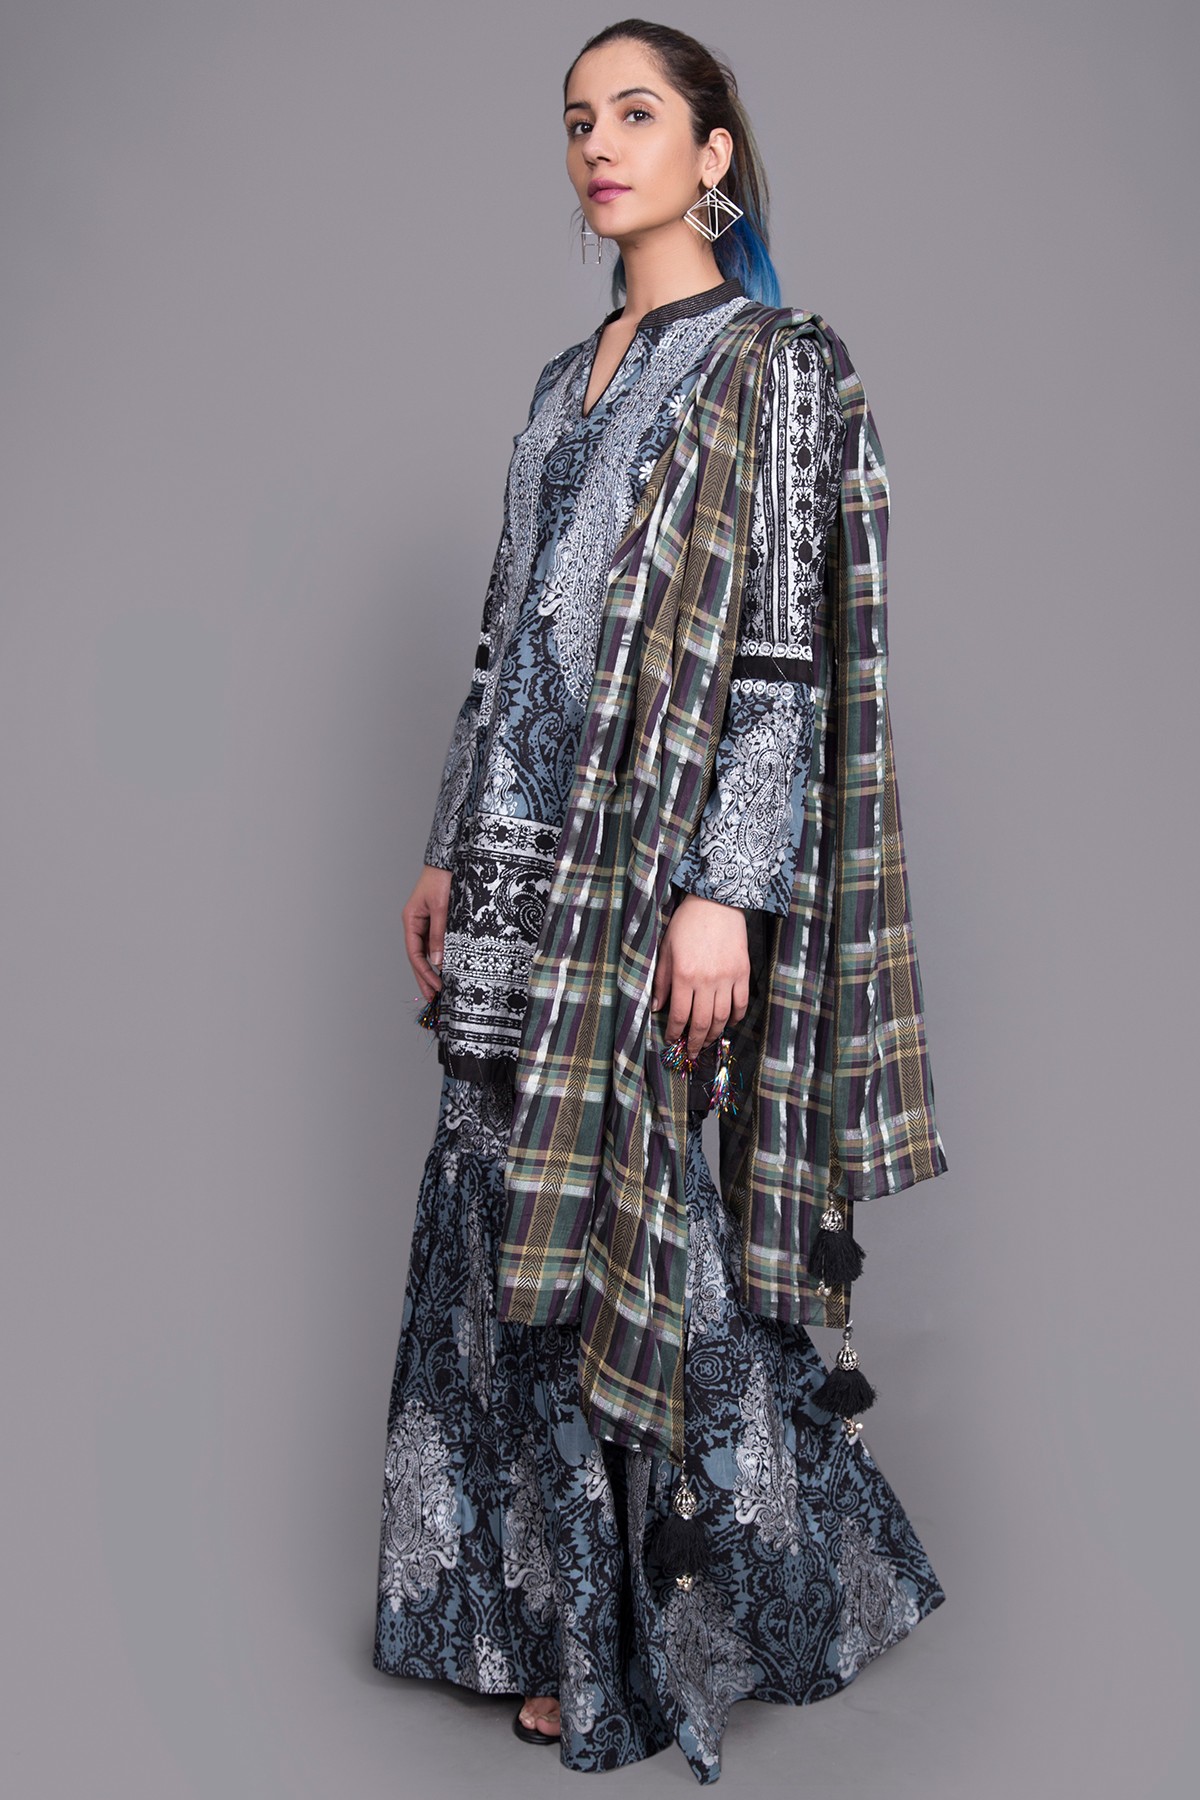 Elegant grey 3 piece ready to wear dress by Generation women 2019